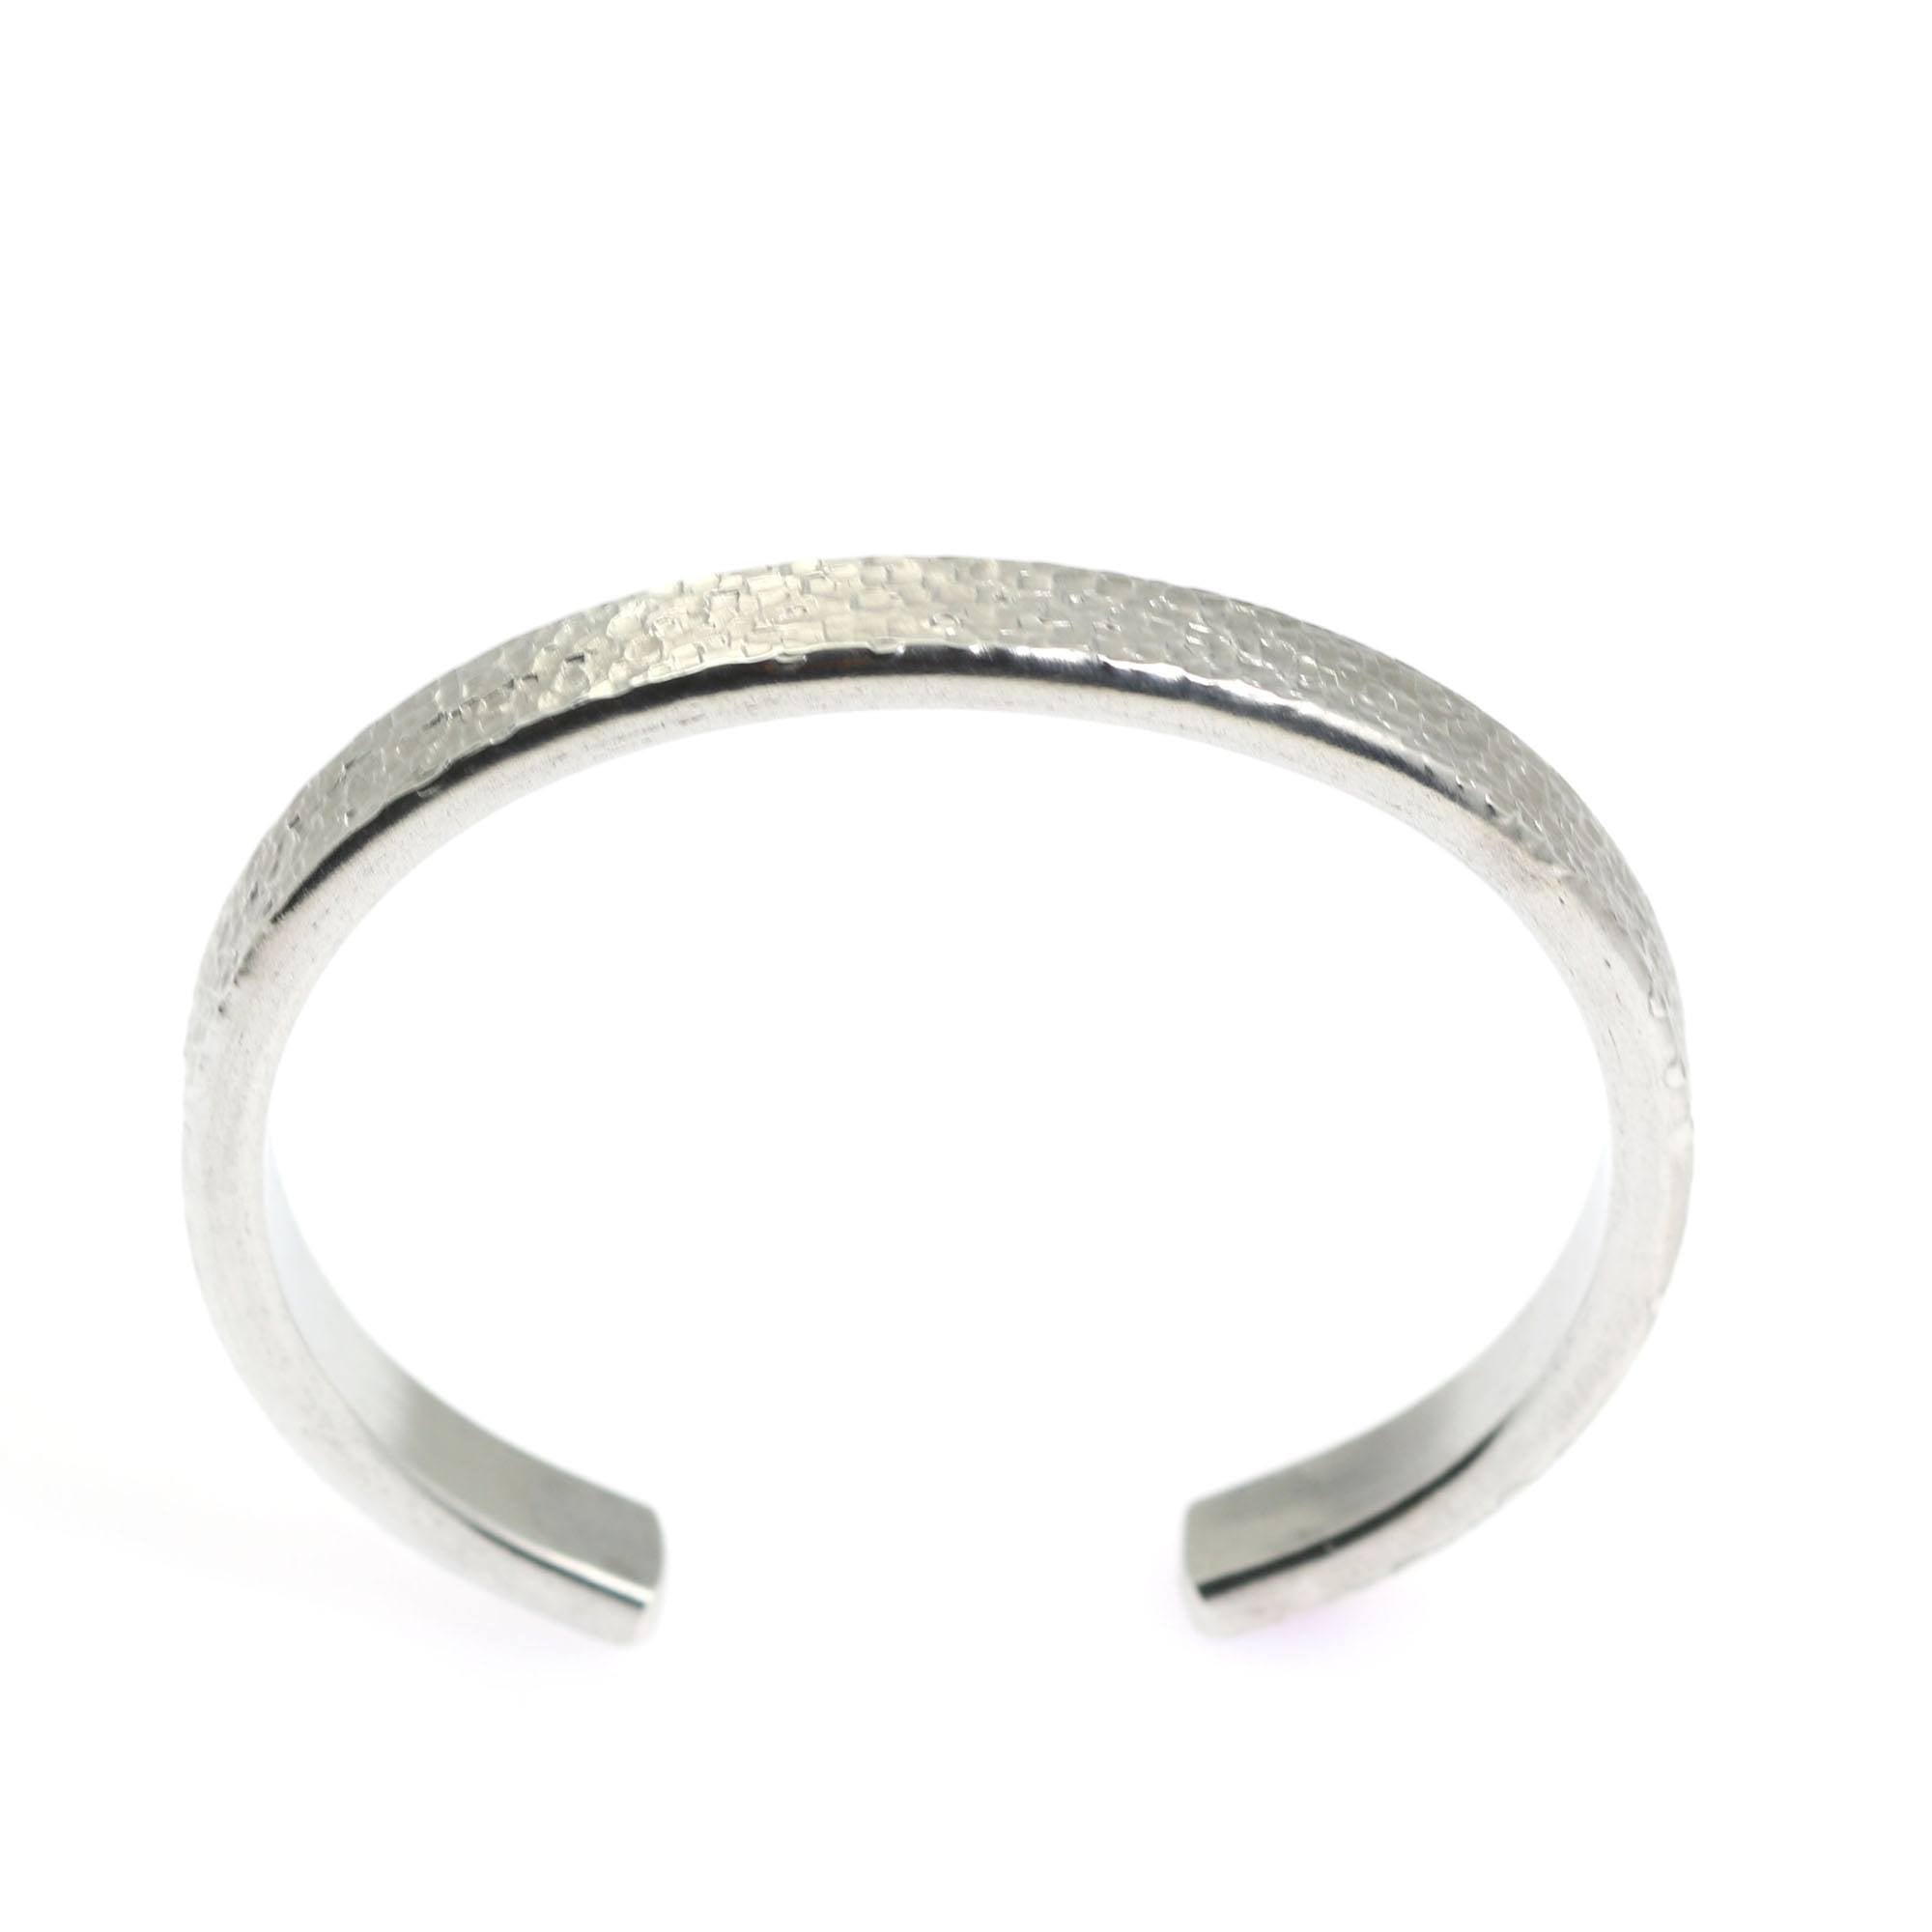 Thin Texturized Aluminum Cuff Bracelet Opening